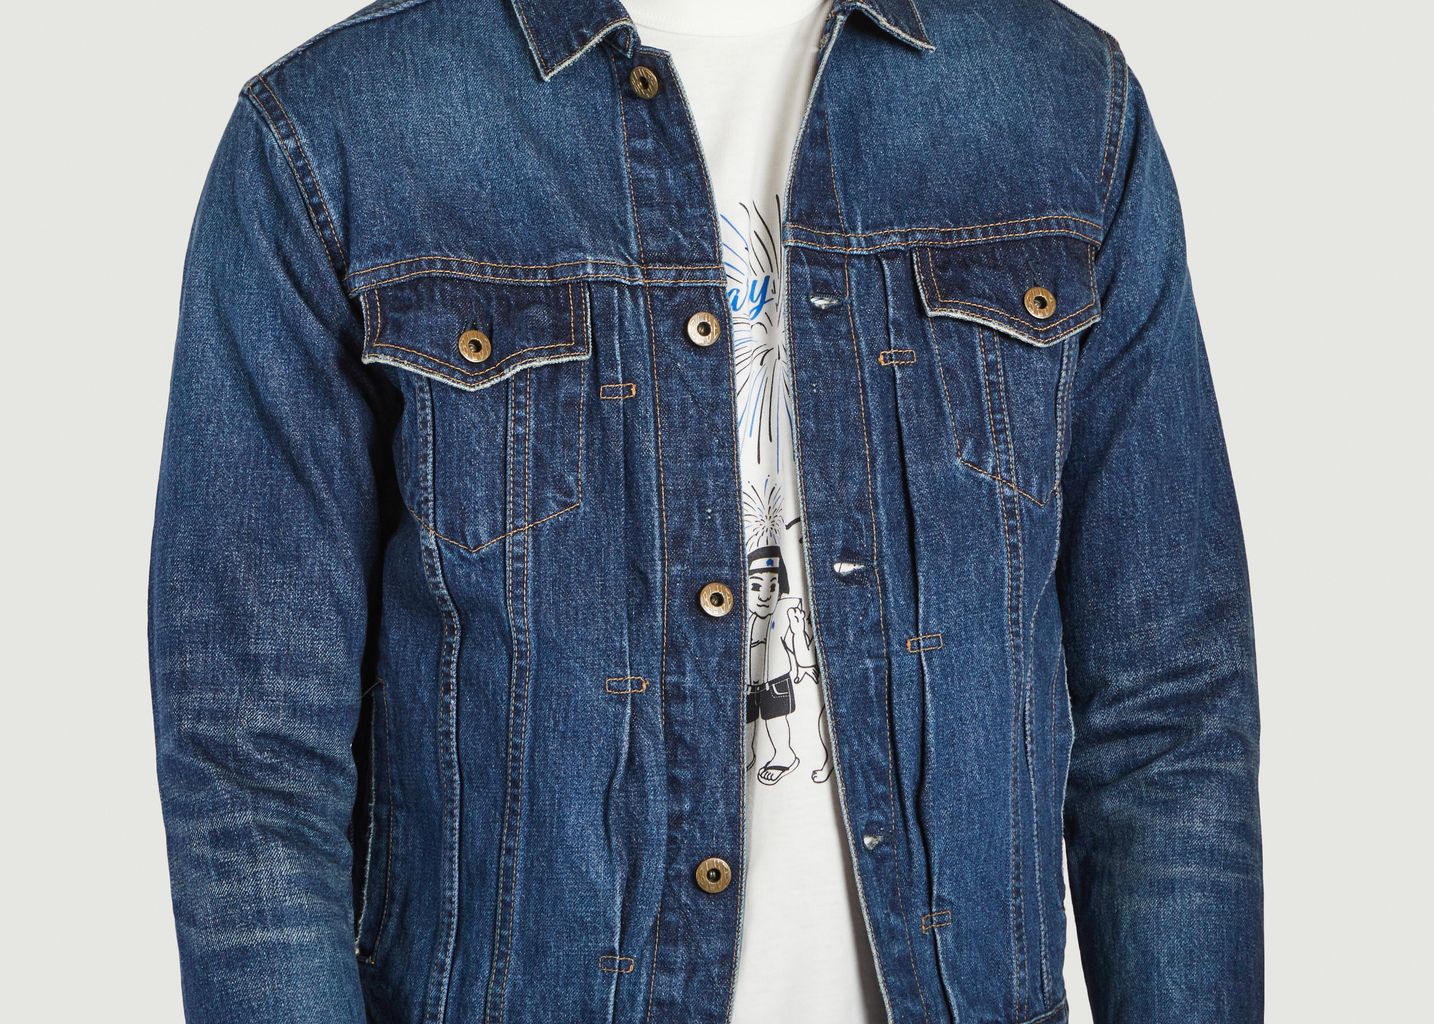 Straight cut denim jacket - Japan Blue Jeans